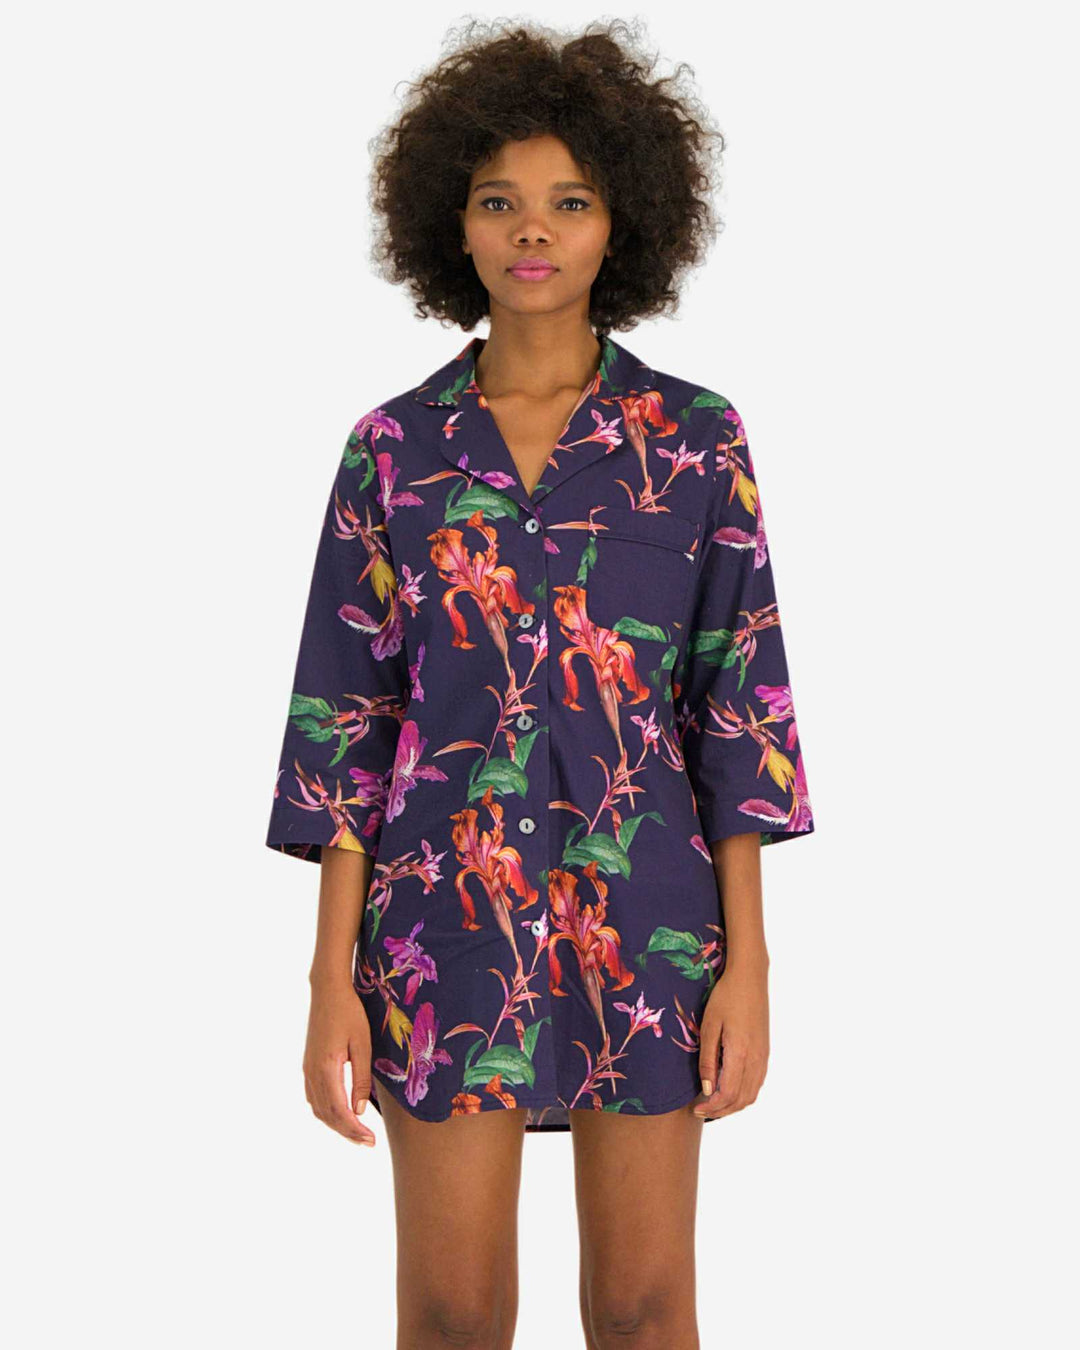 Womens sleepshirt - vintage iris navy flowers pattern